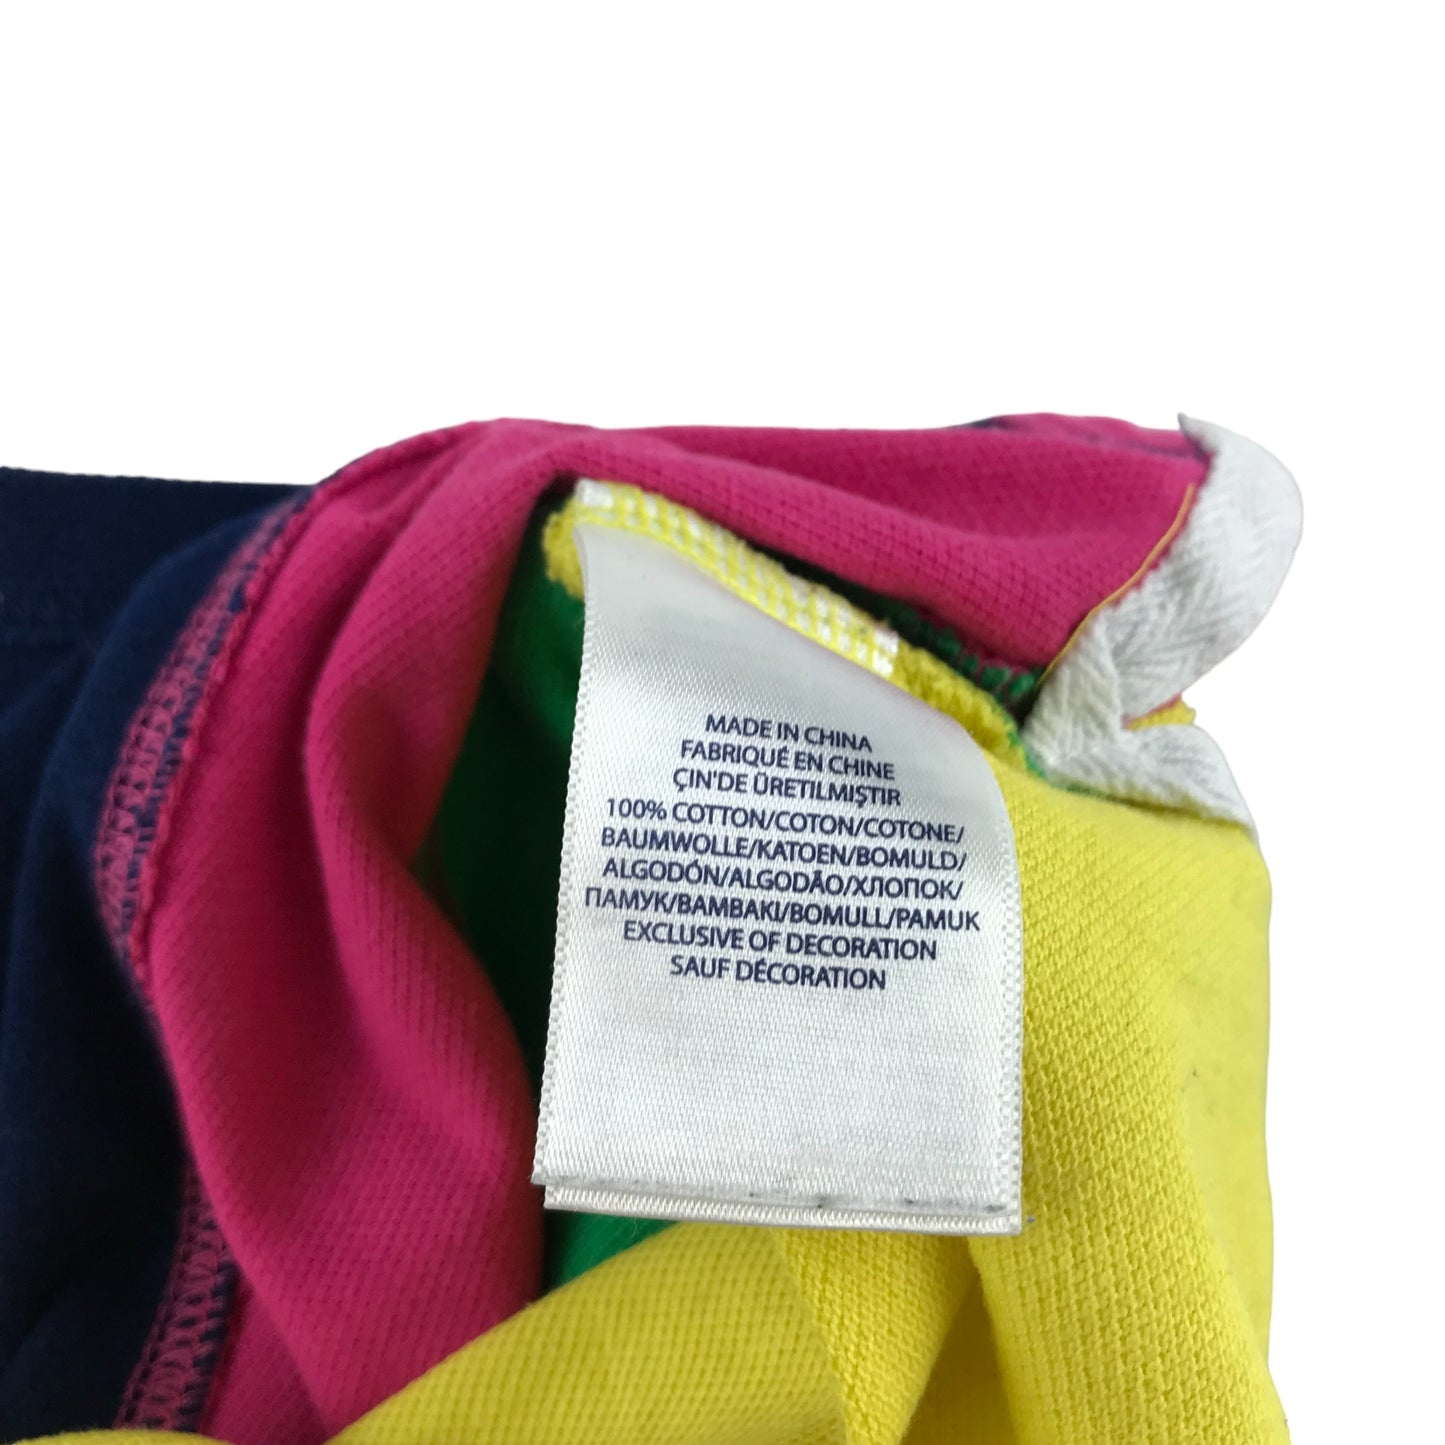 Ralph Lauren Polo Shirt Age 5 Navy Pink Green Yellow Panelled Short Sleeve Cotton